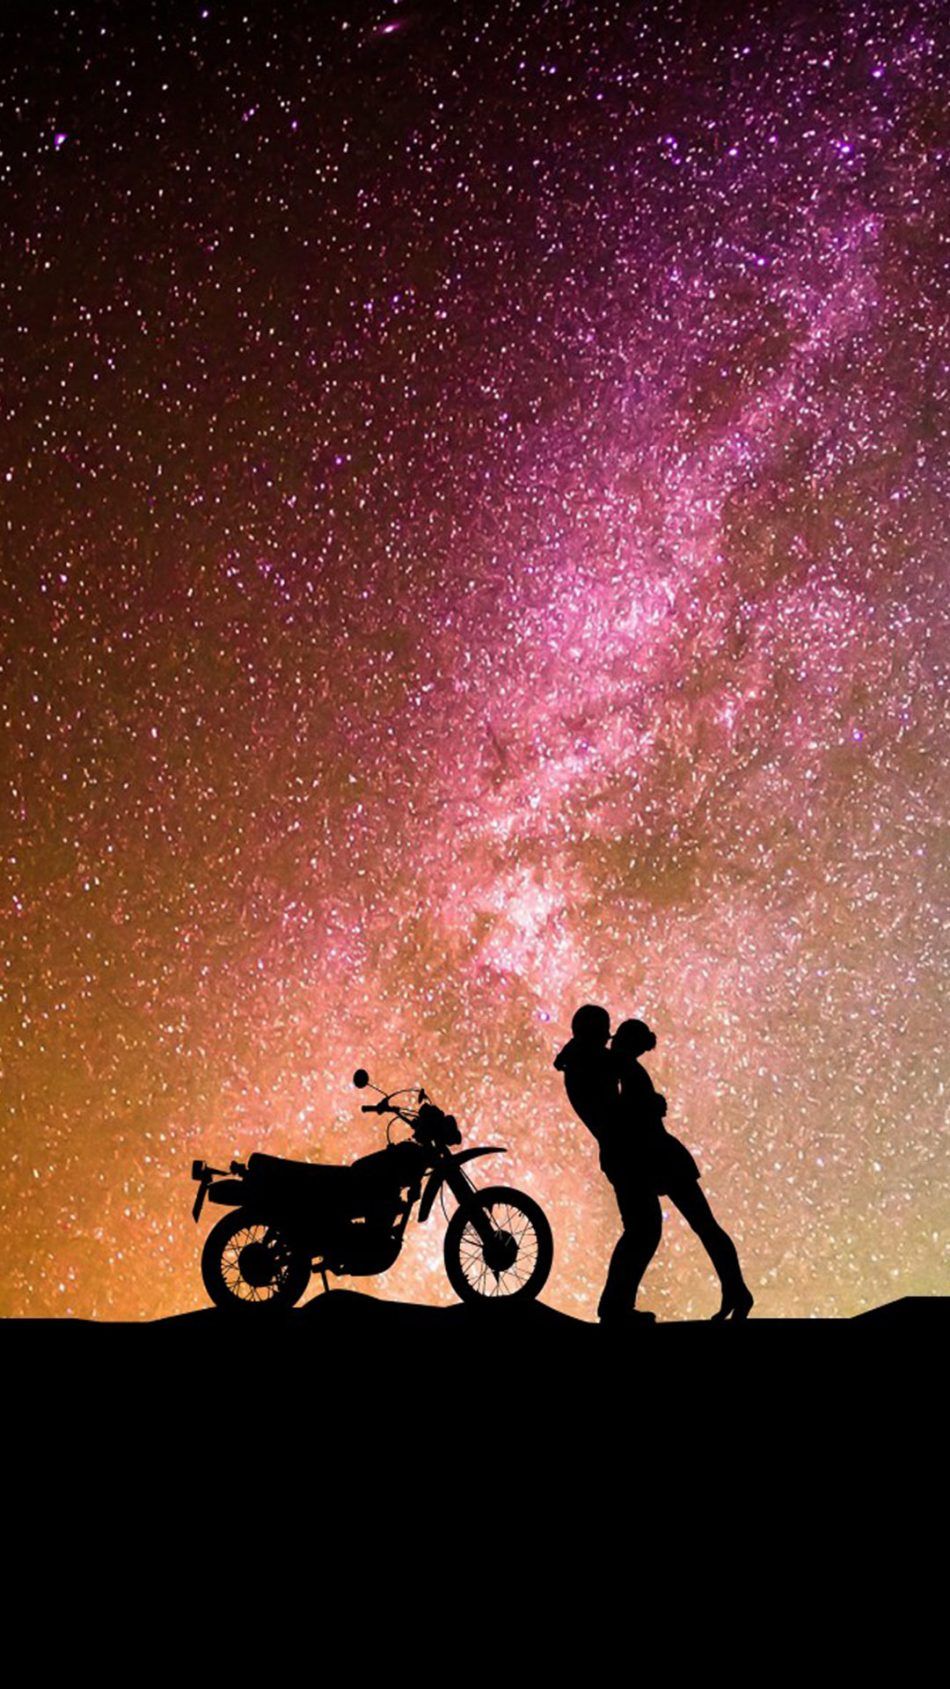 Couple Romantic Kiss Motorcycle Free 4K Ultra HD Mobile Wallpaper